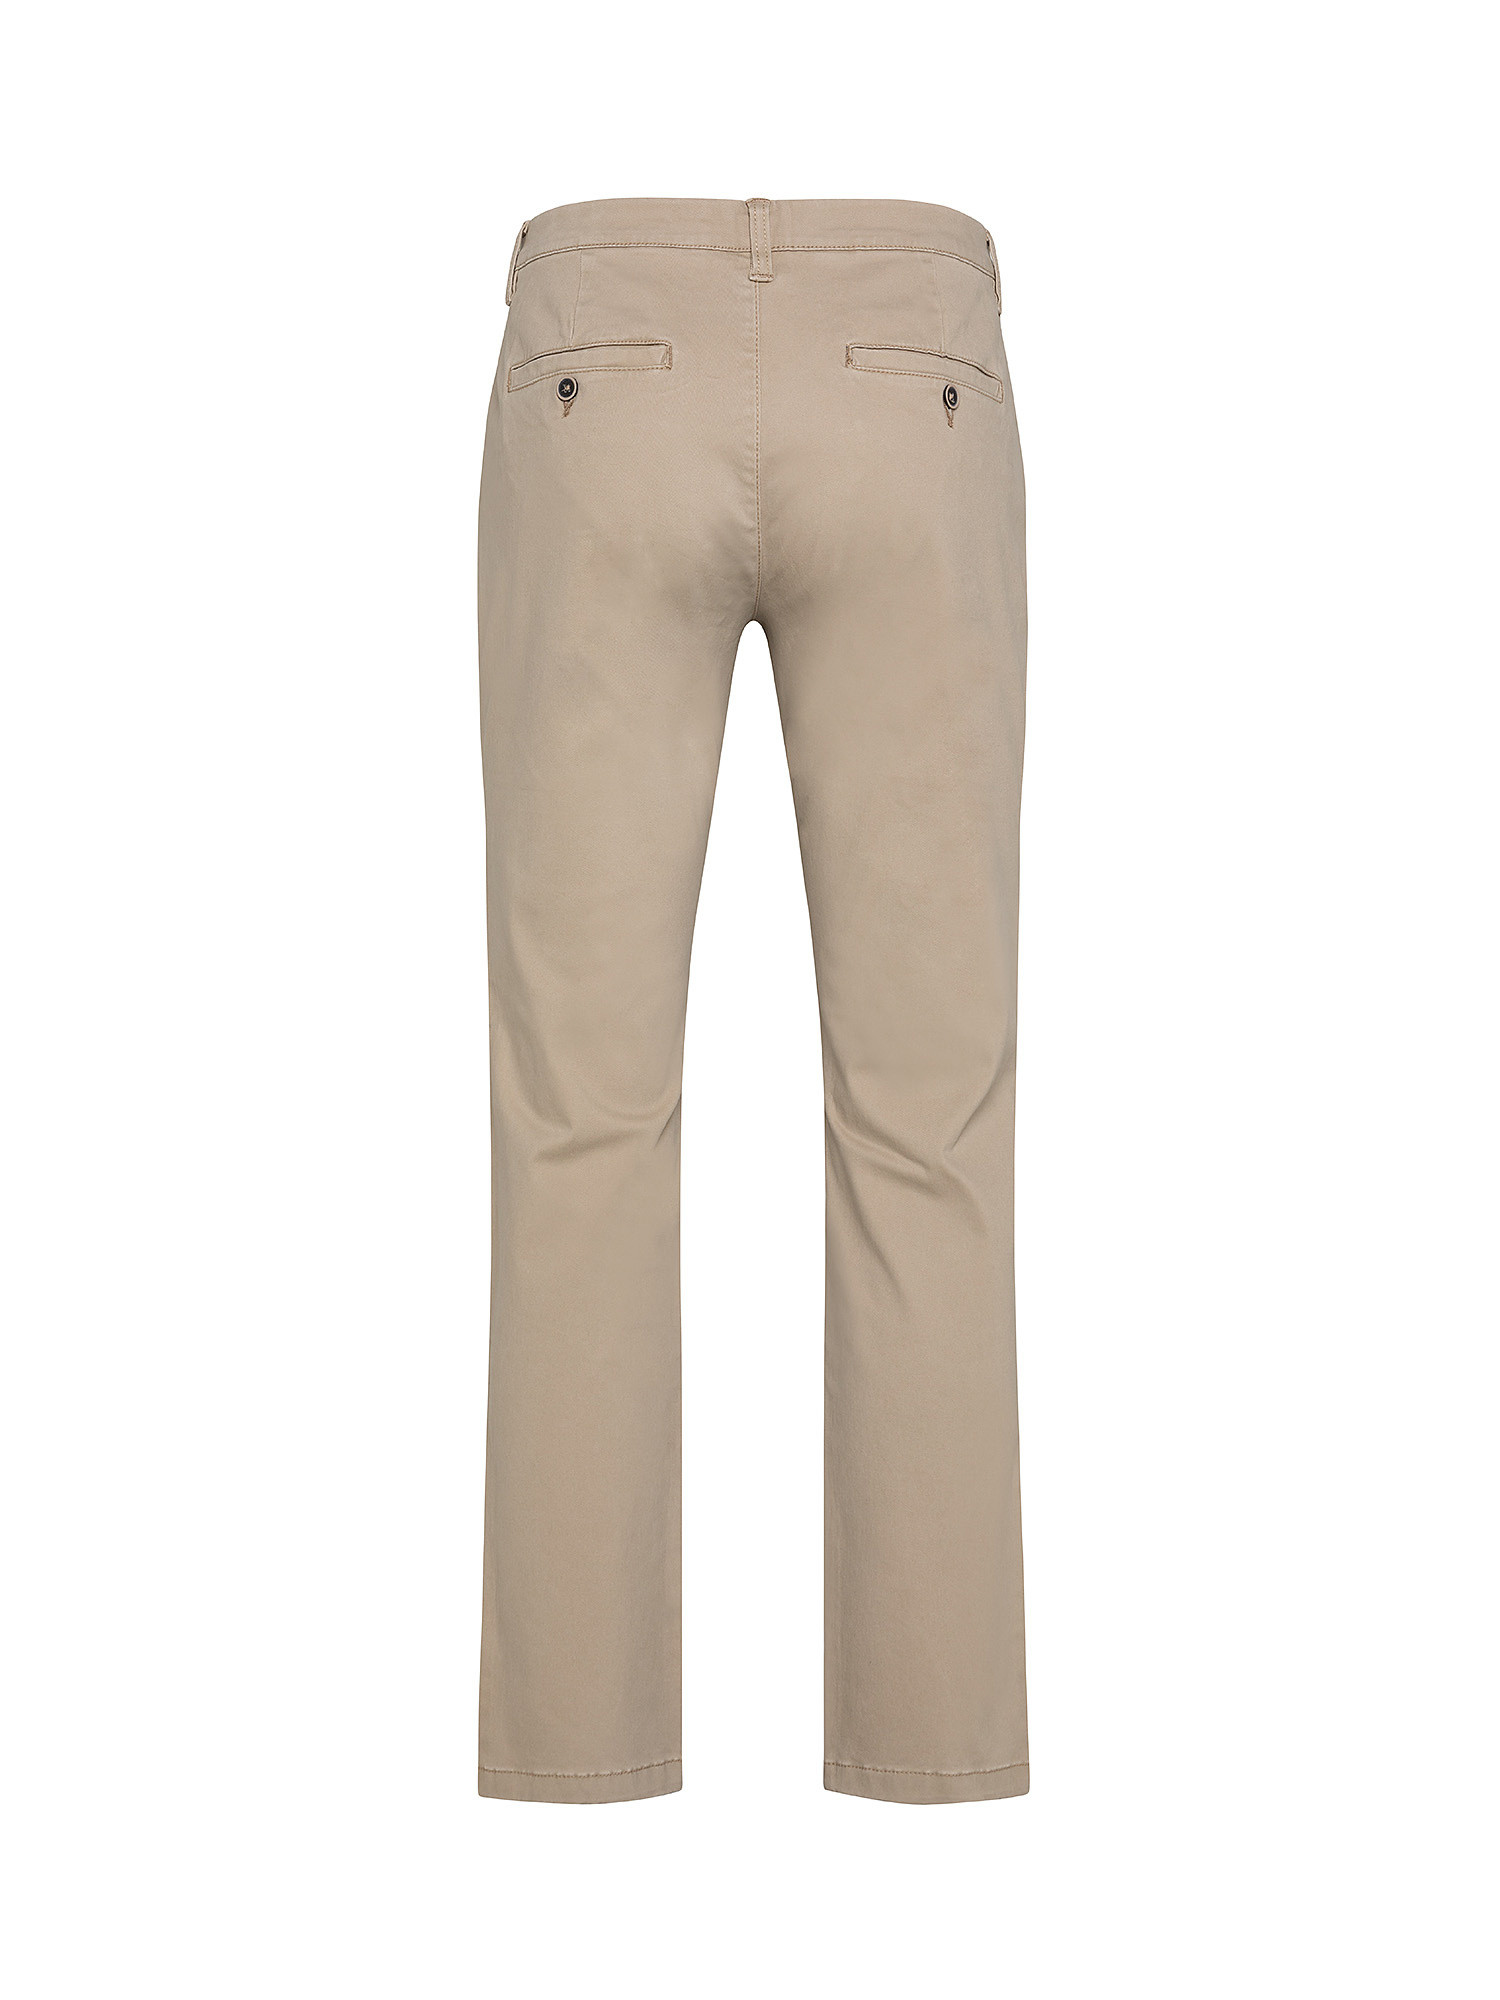 Pantalone slim comfort fit in cotone elasticizzato, Beige, large image number 1